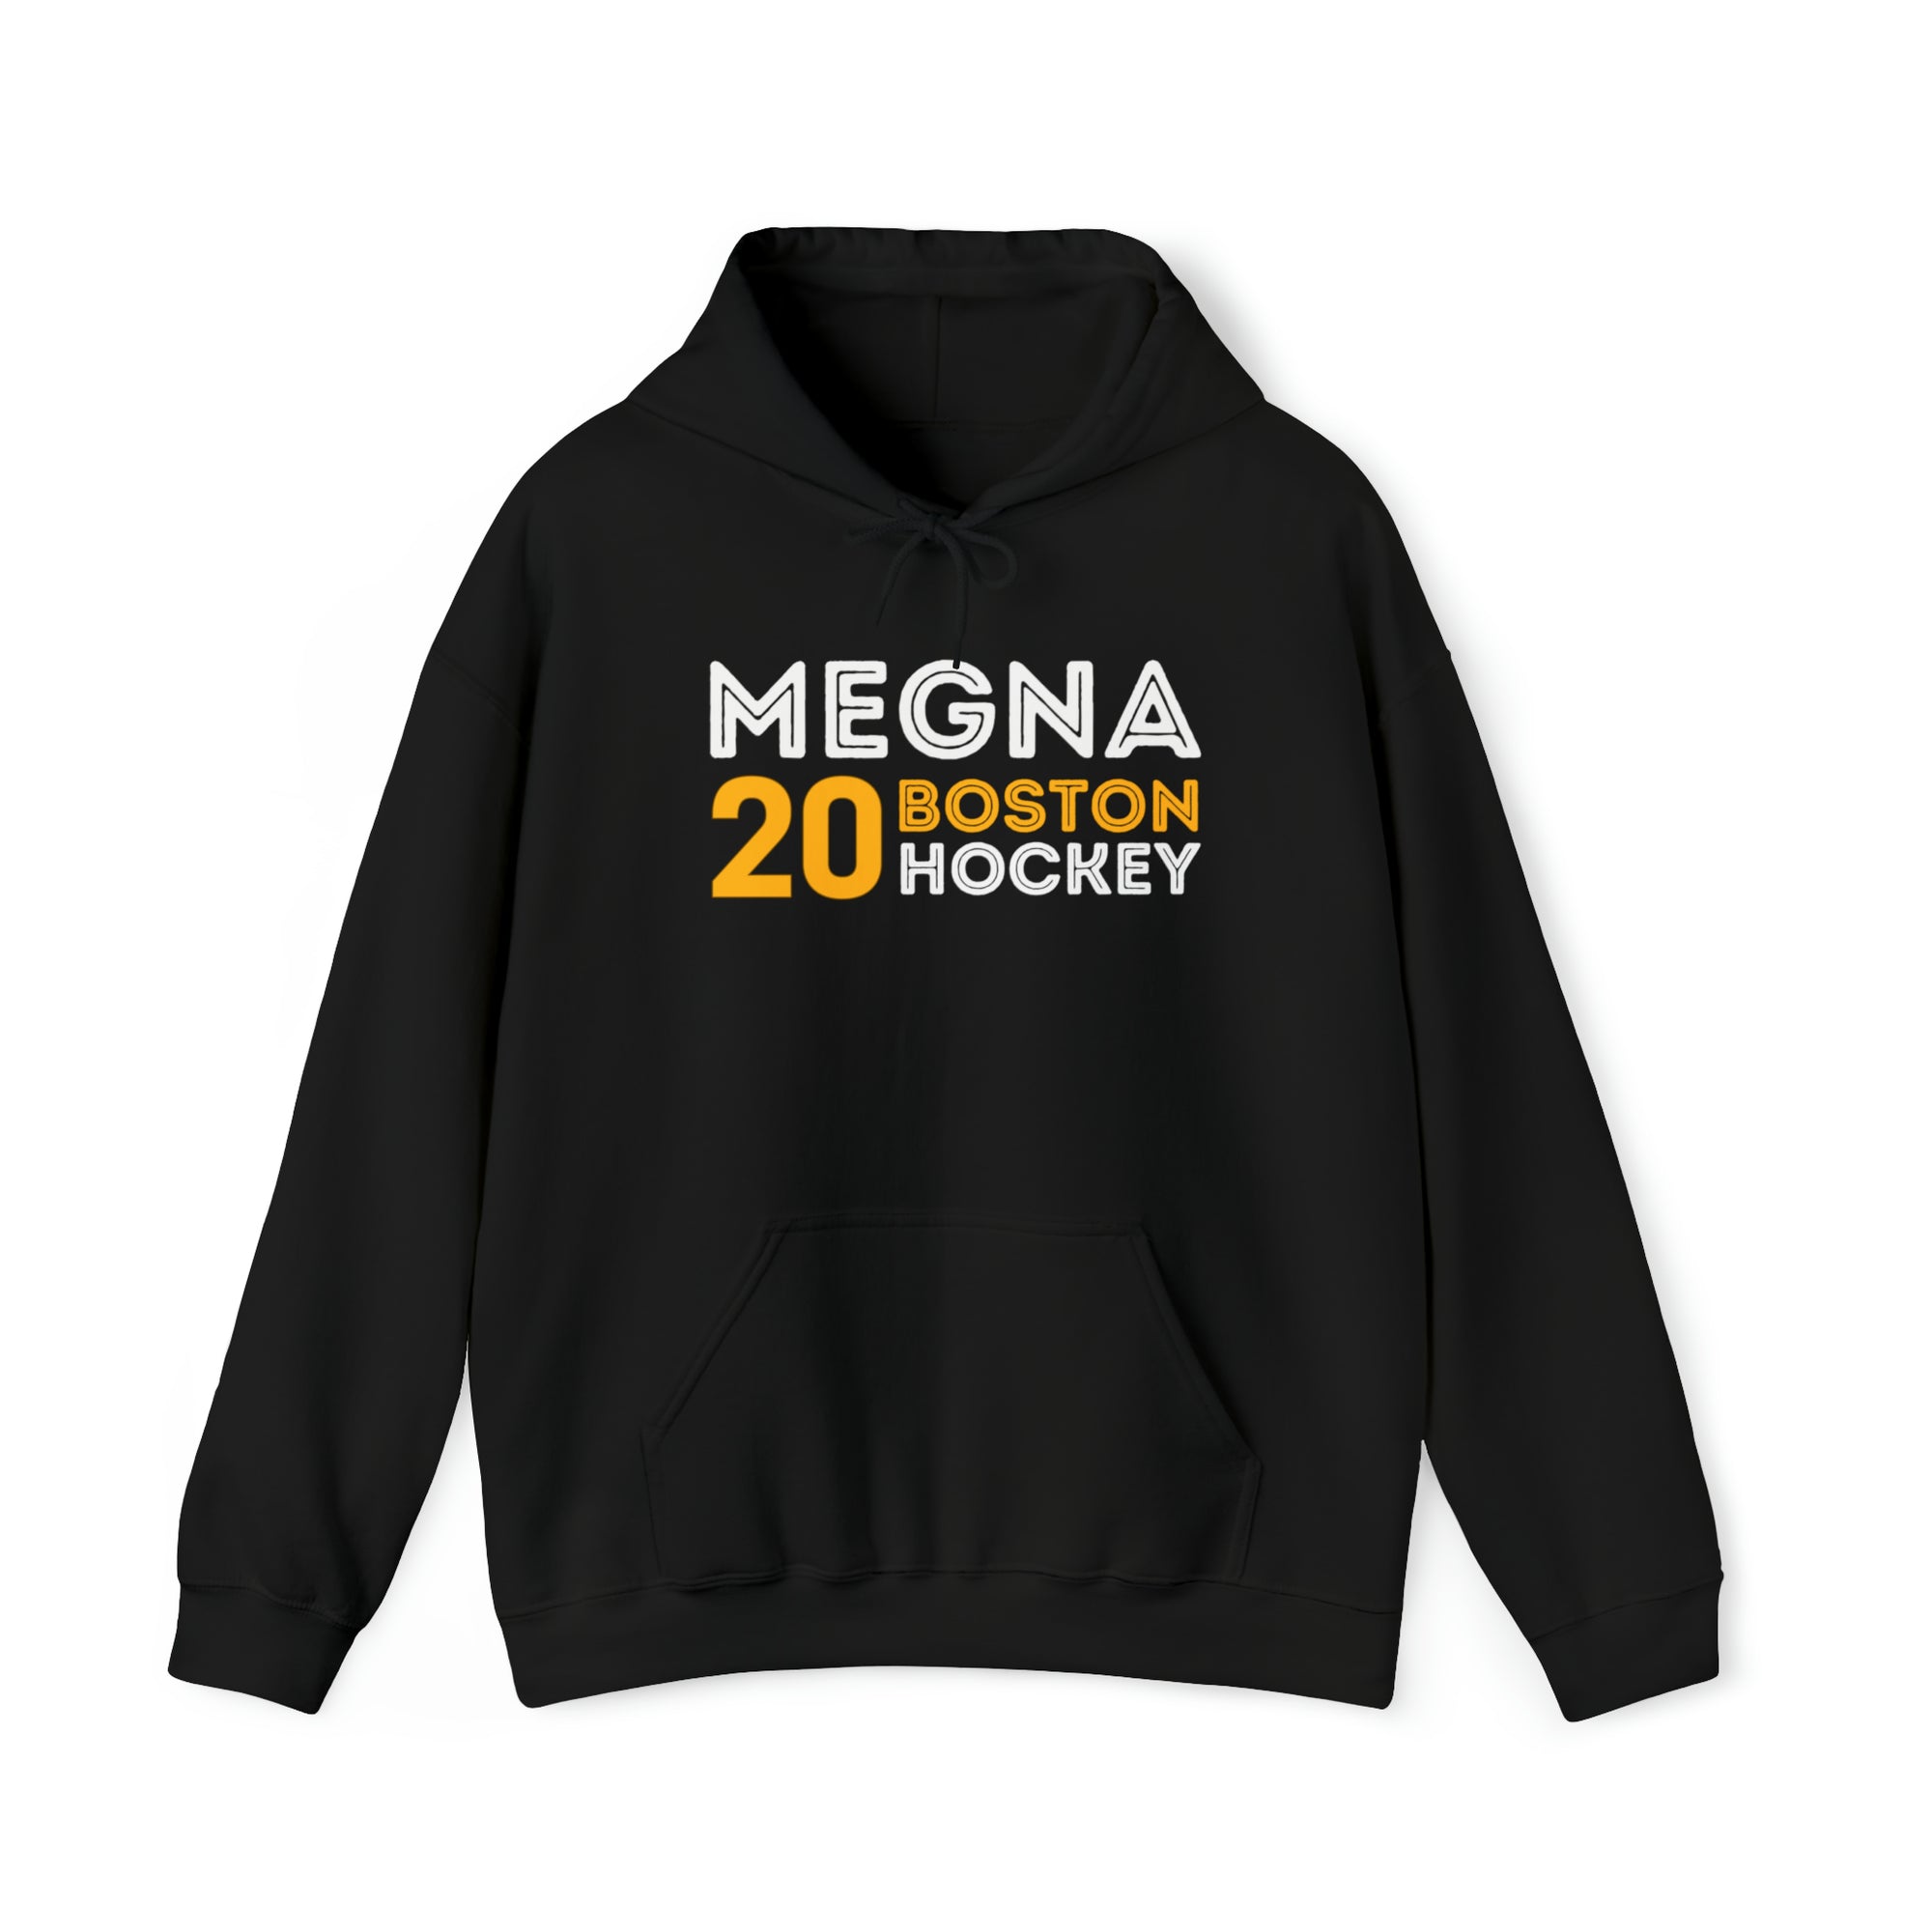 Megna 20 Boston Hockey Grafitti Wall Design Unisex Hooded Sweatshirt